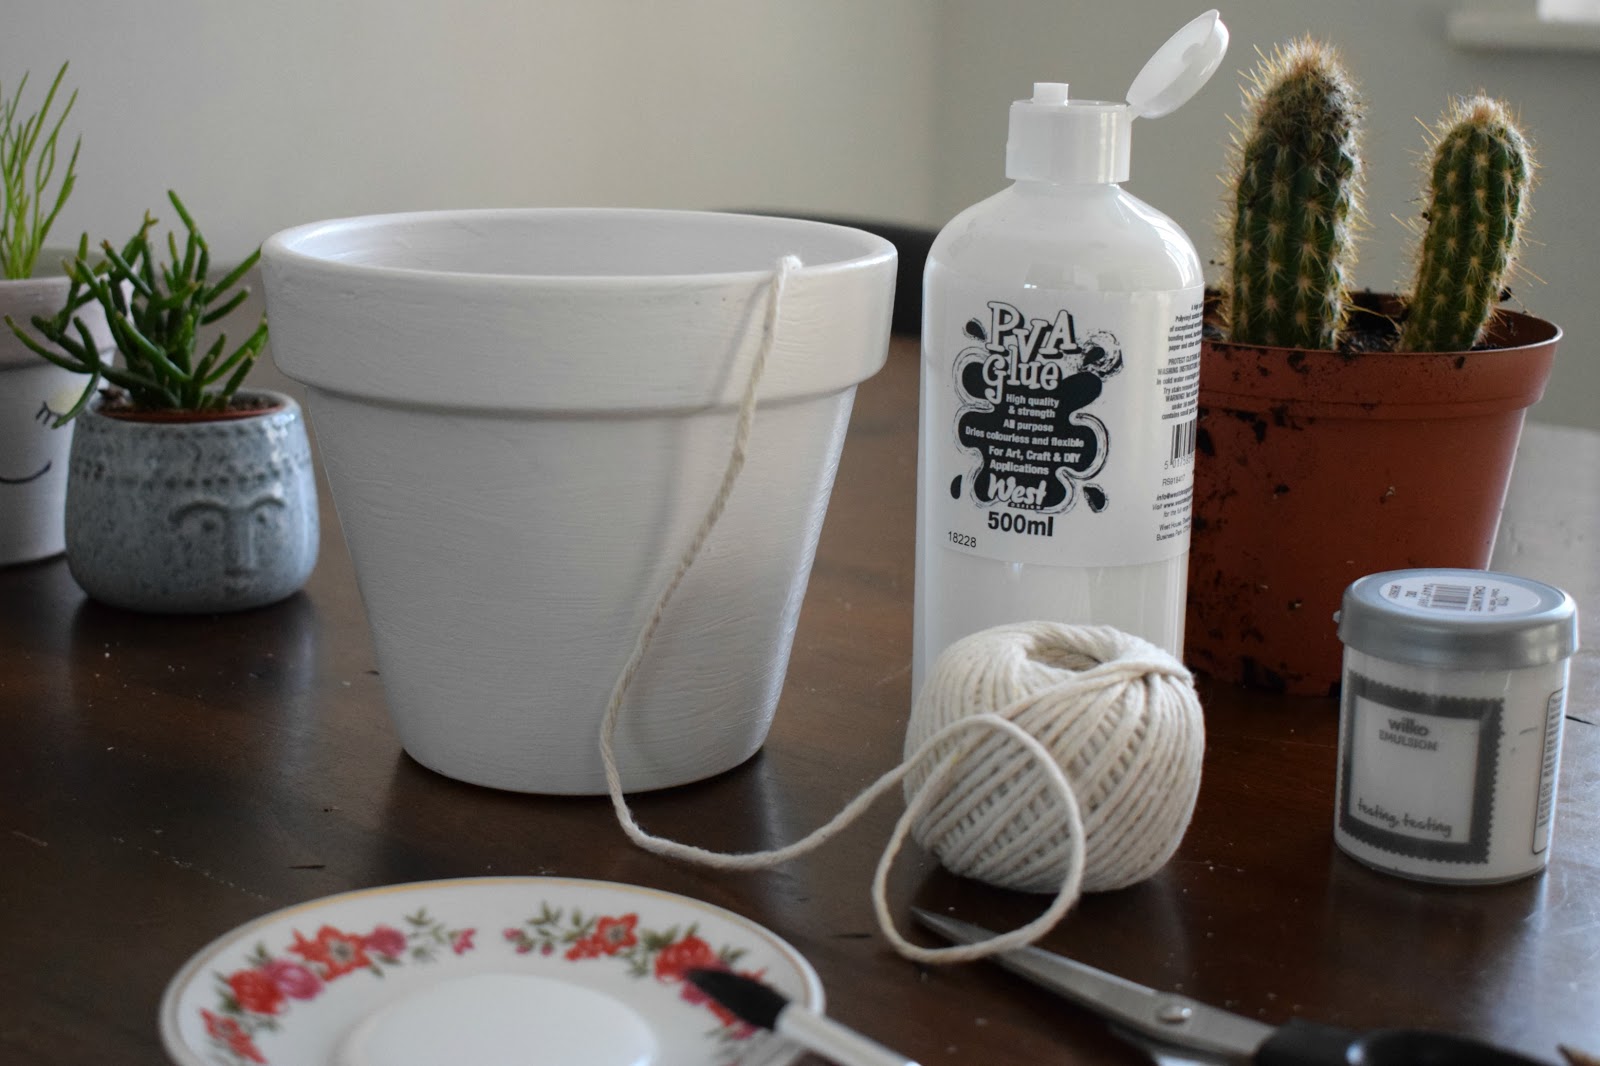 DIY how to make a cute cacti pot